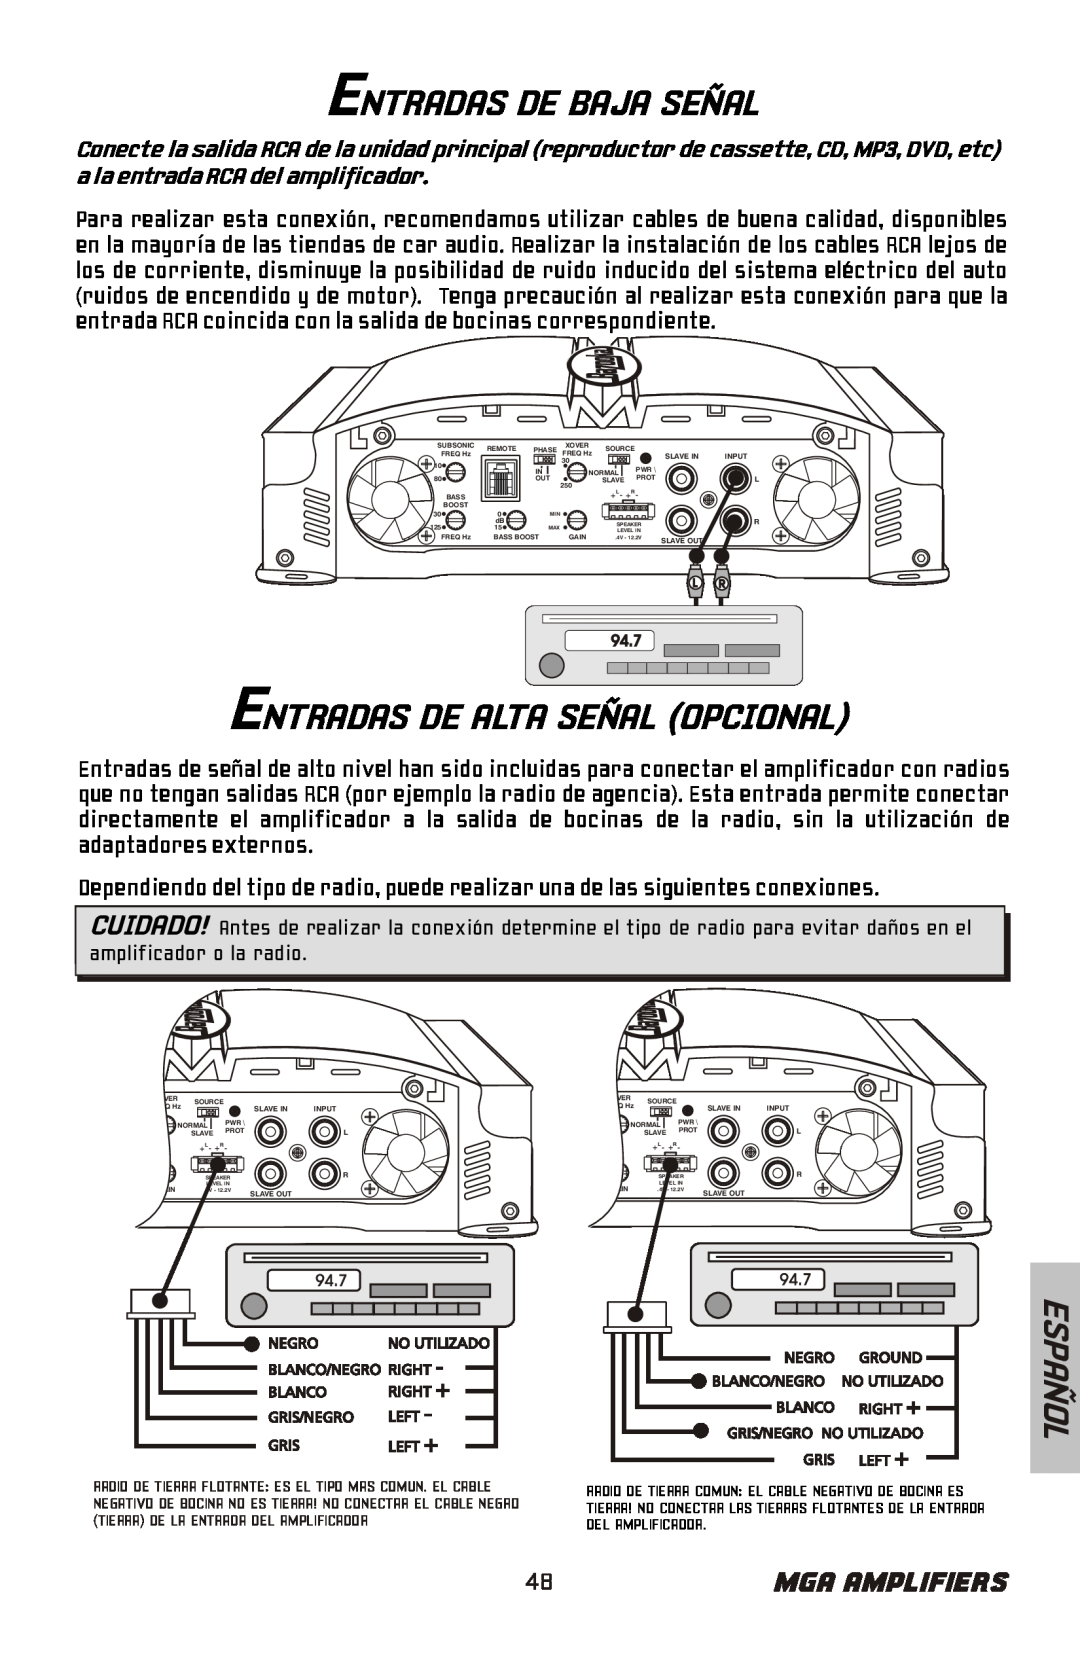 Bazooka MGA11000H, MGA11500H manual Entradas De Baja Señal, Entradas De Alta Señal Opcional, Español, Mga Amplifiers 